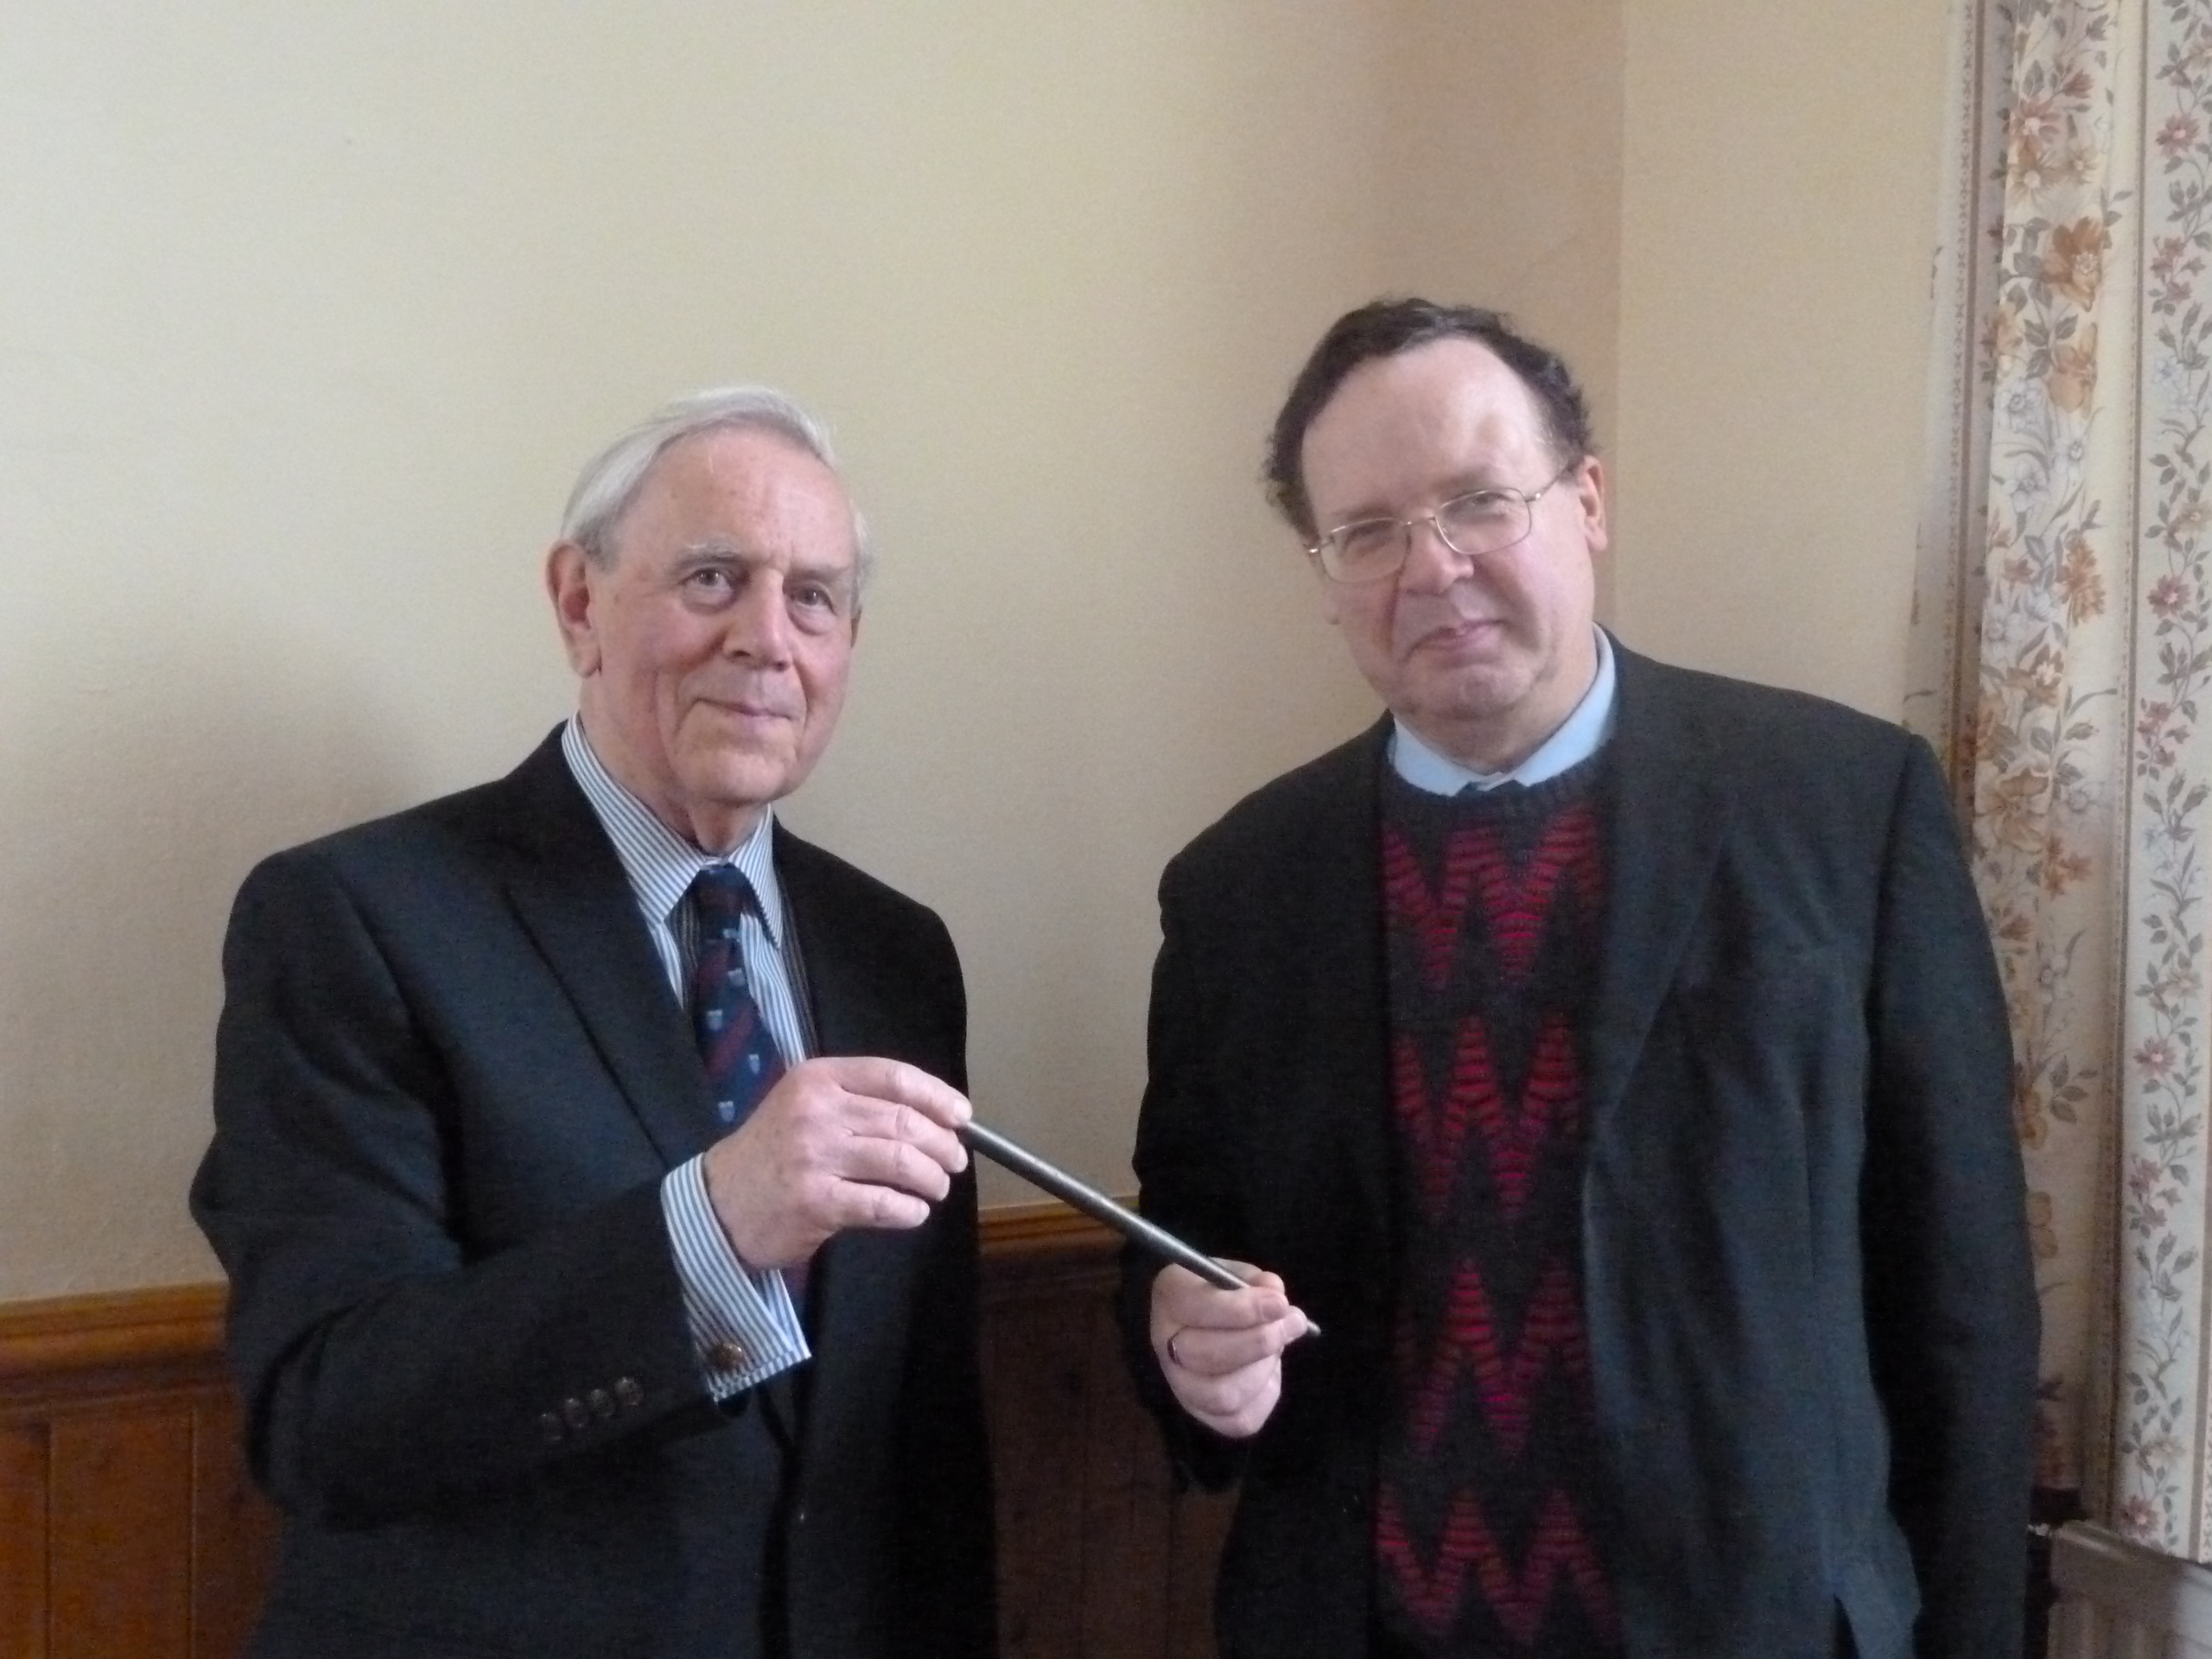 Alan Spedding (left) passes the Presidential baton to John Scott Whiteley at the AGM 2013